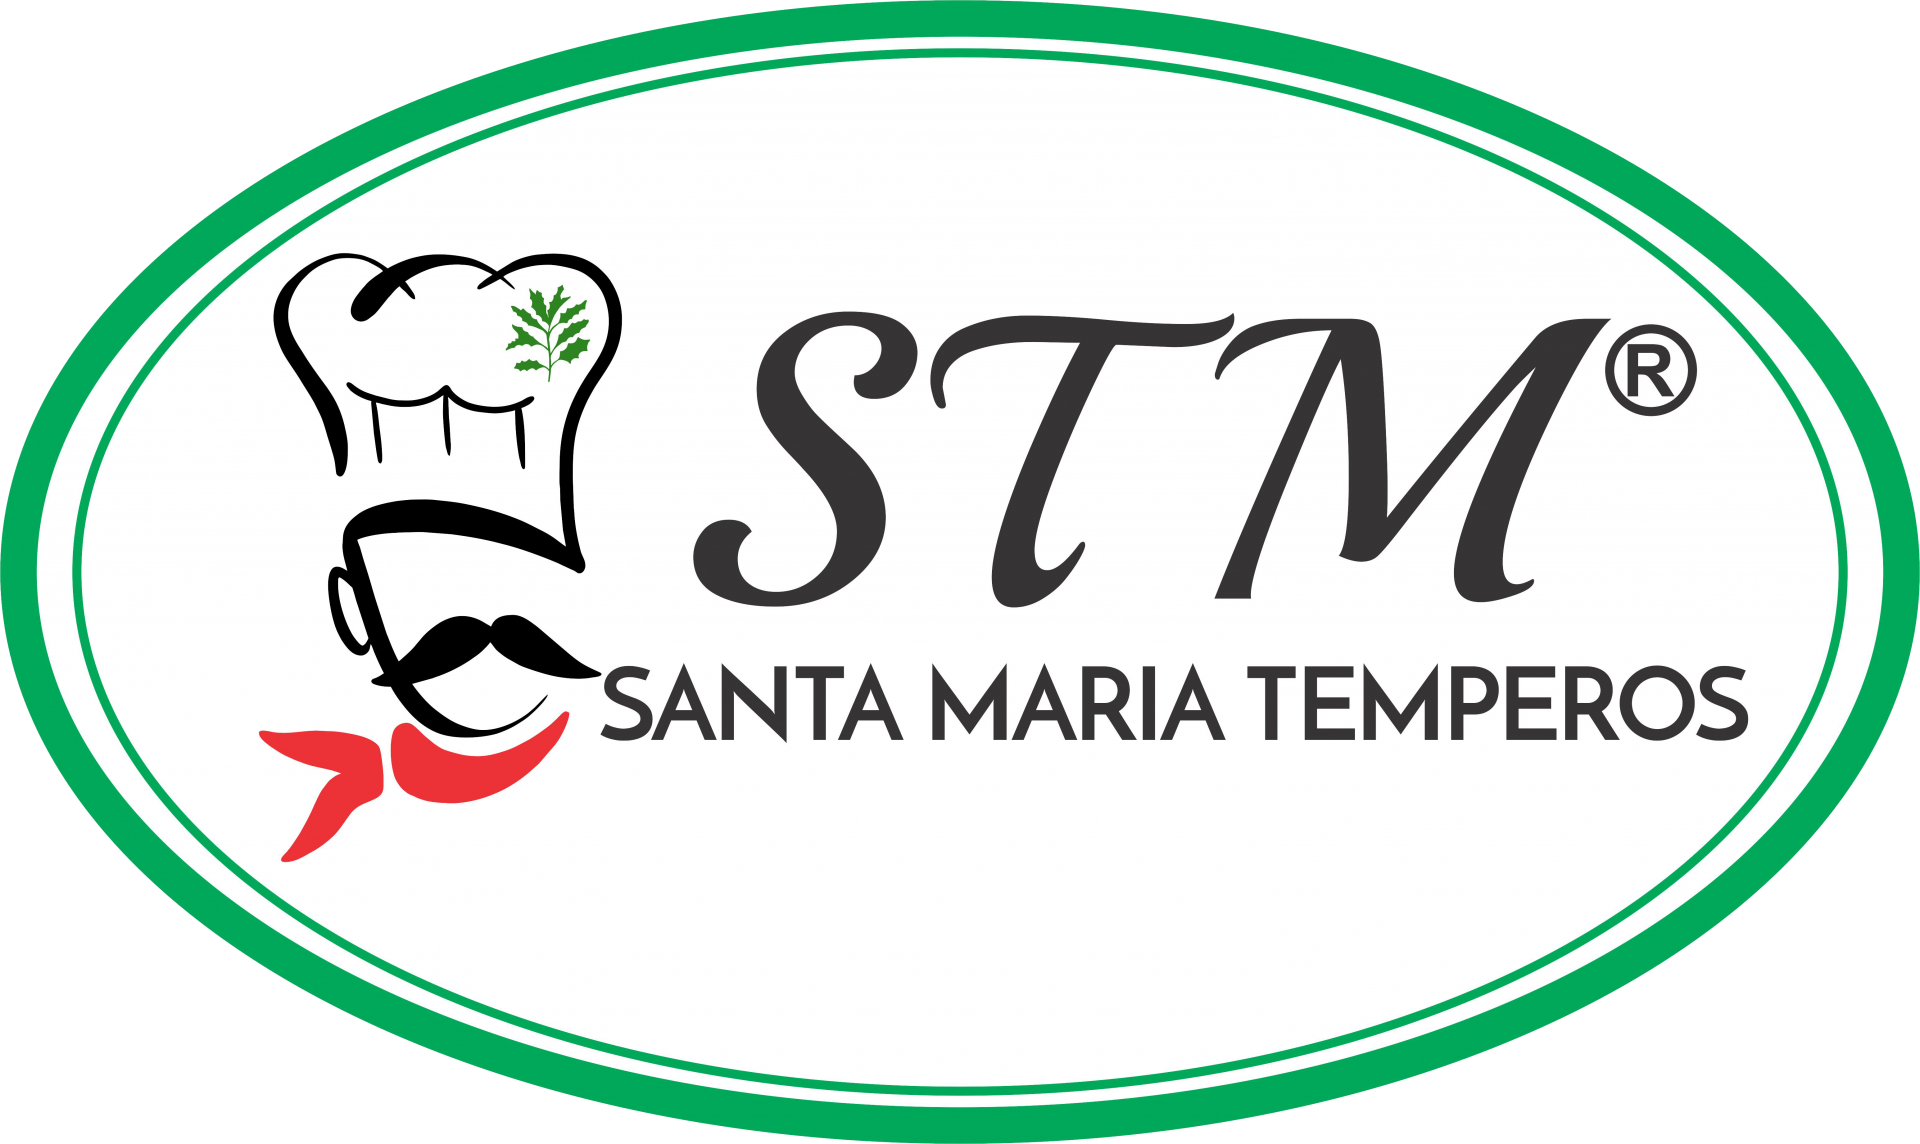 Santa Maria Temperos